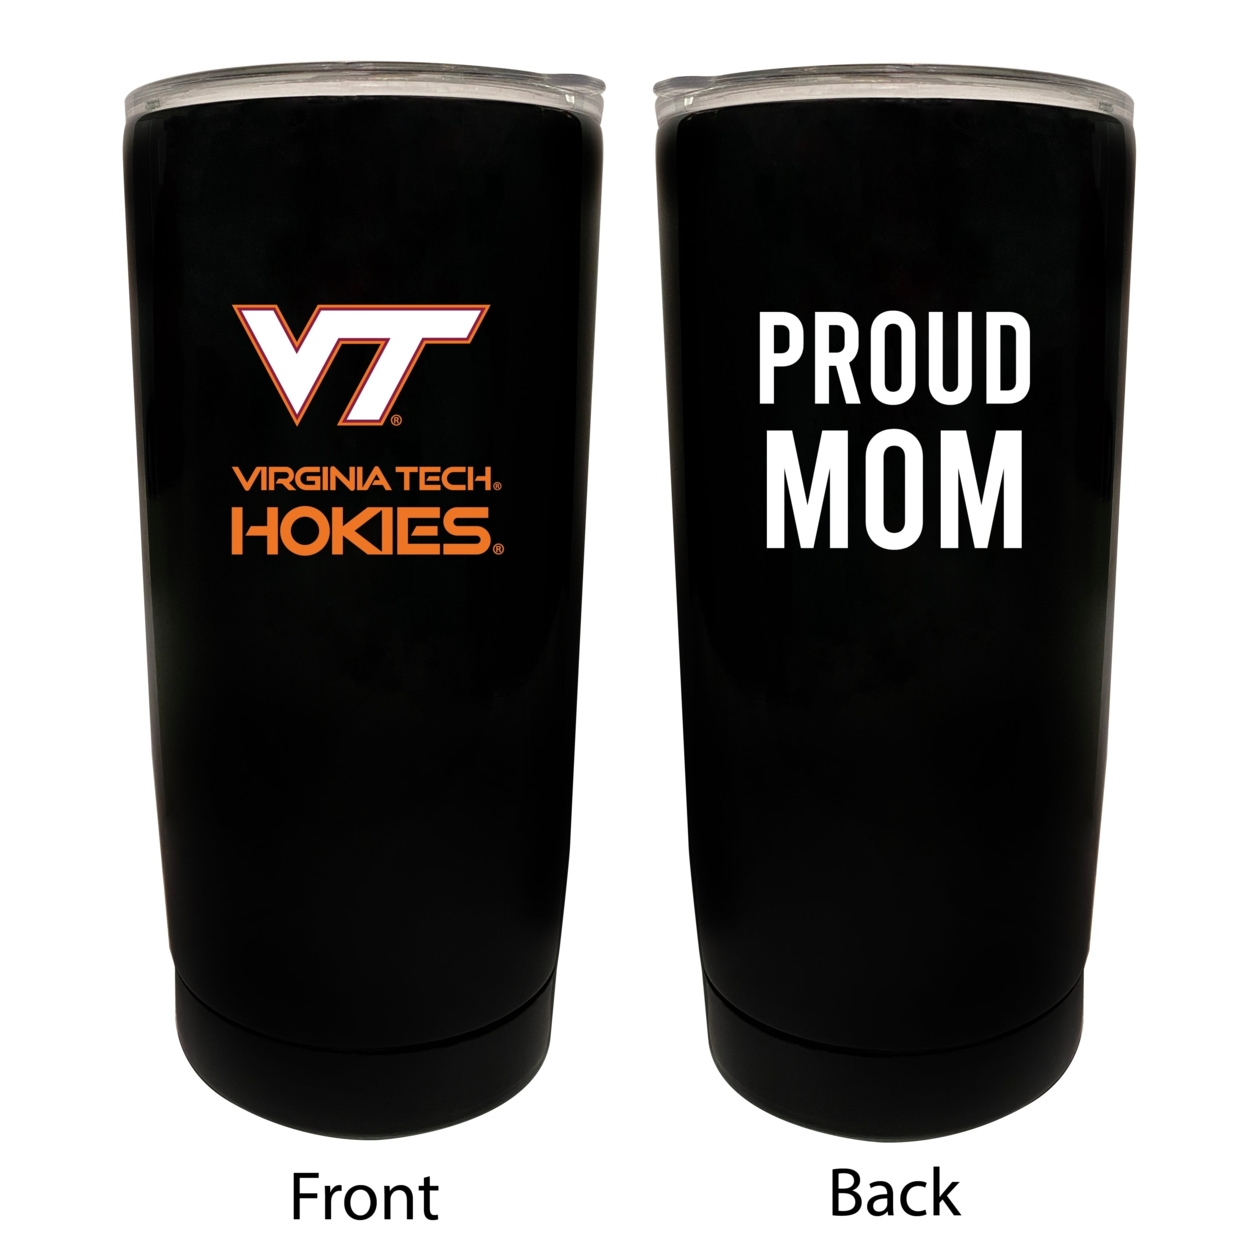 Virginia Tech Hokies Proud Mom 16 Oz Insulated Stainless Steel Tumblers